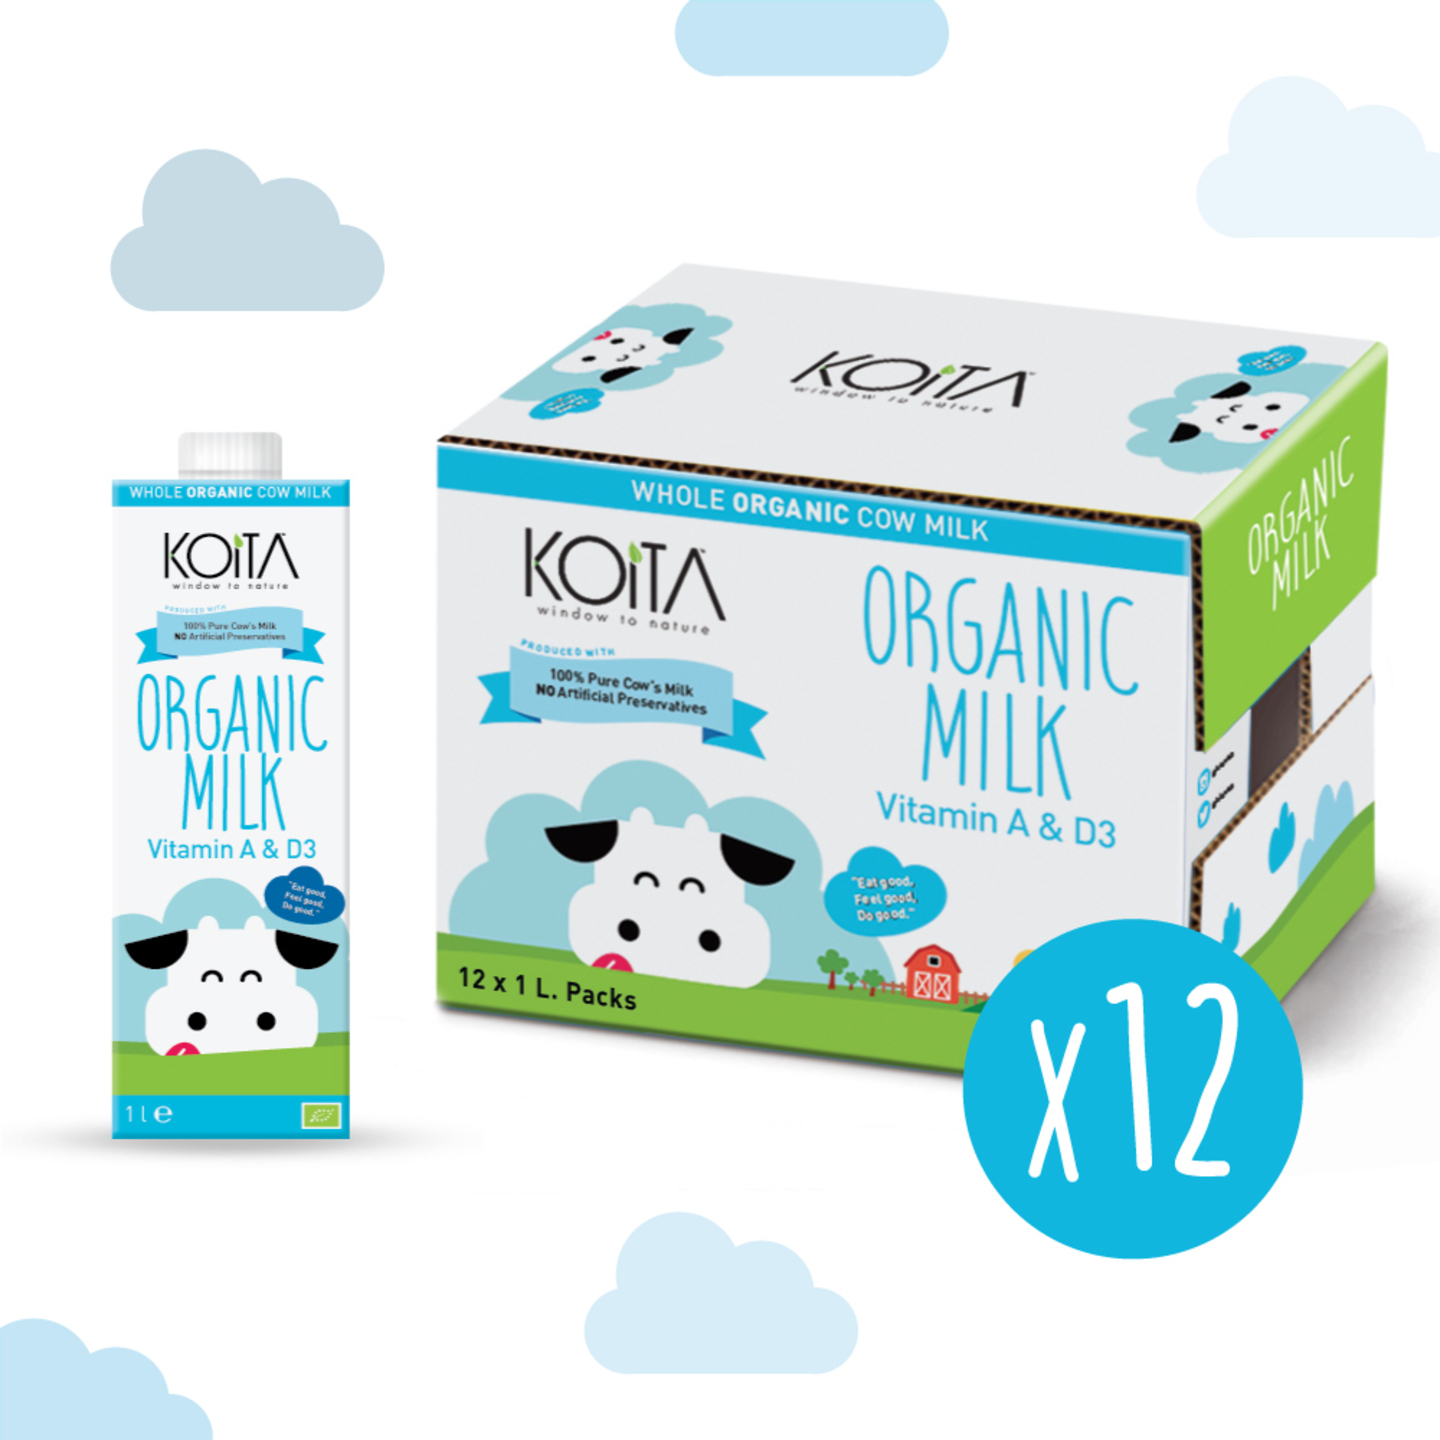 Koita Premium Organic Whole Milk 12 X 1000ml